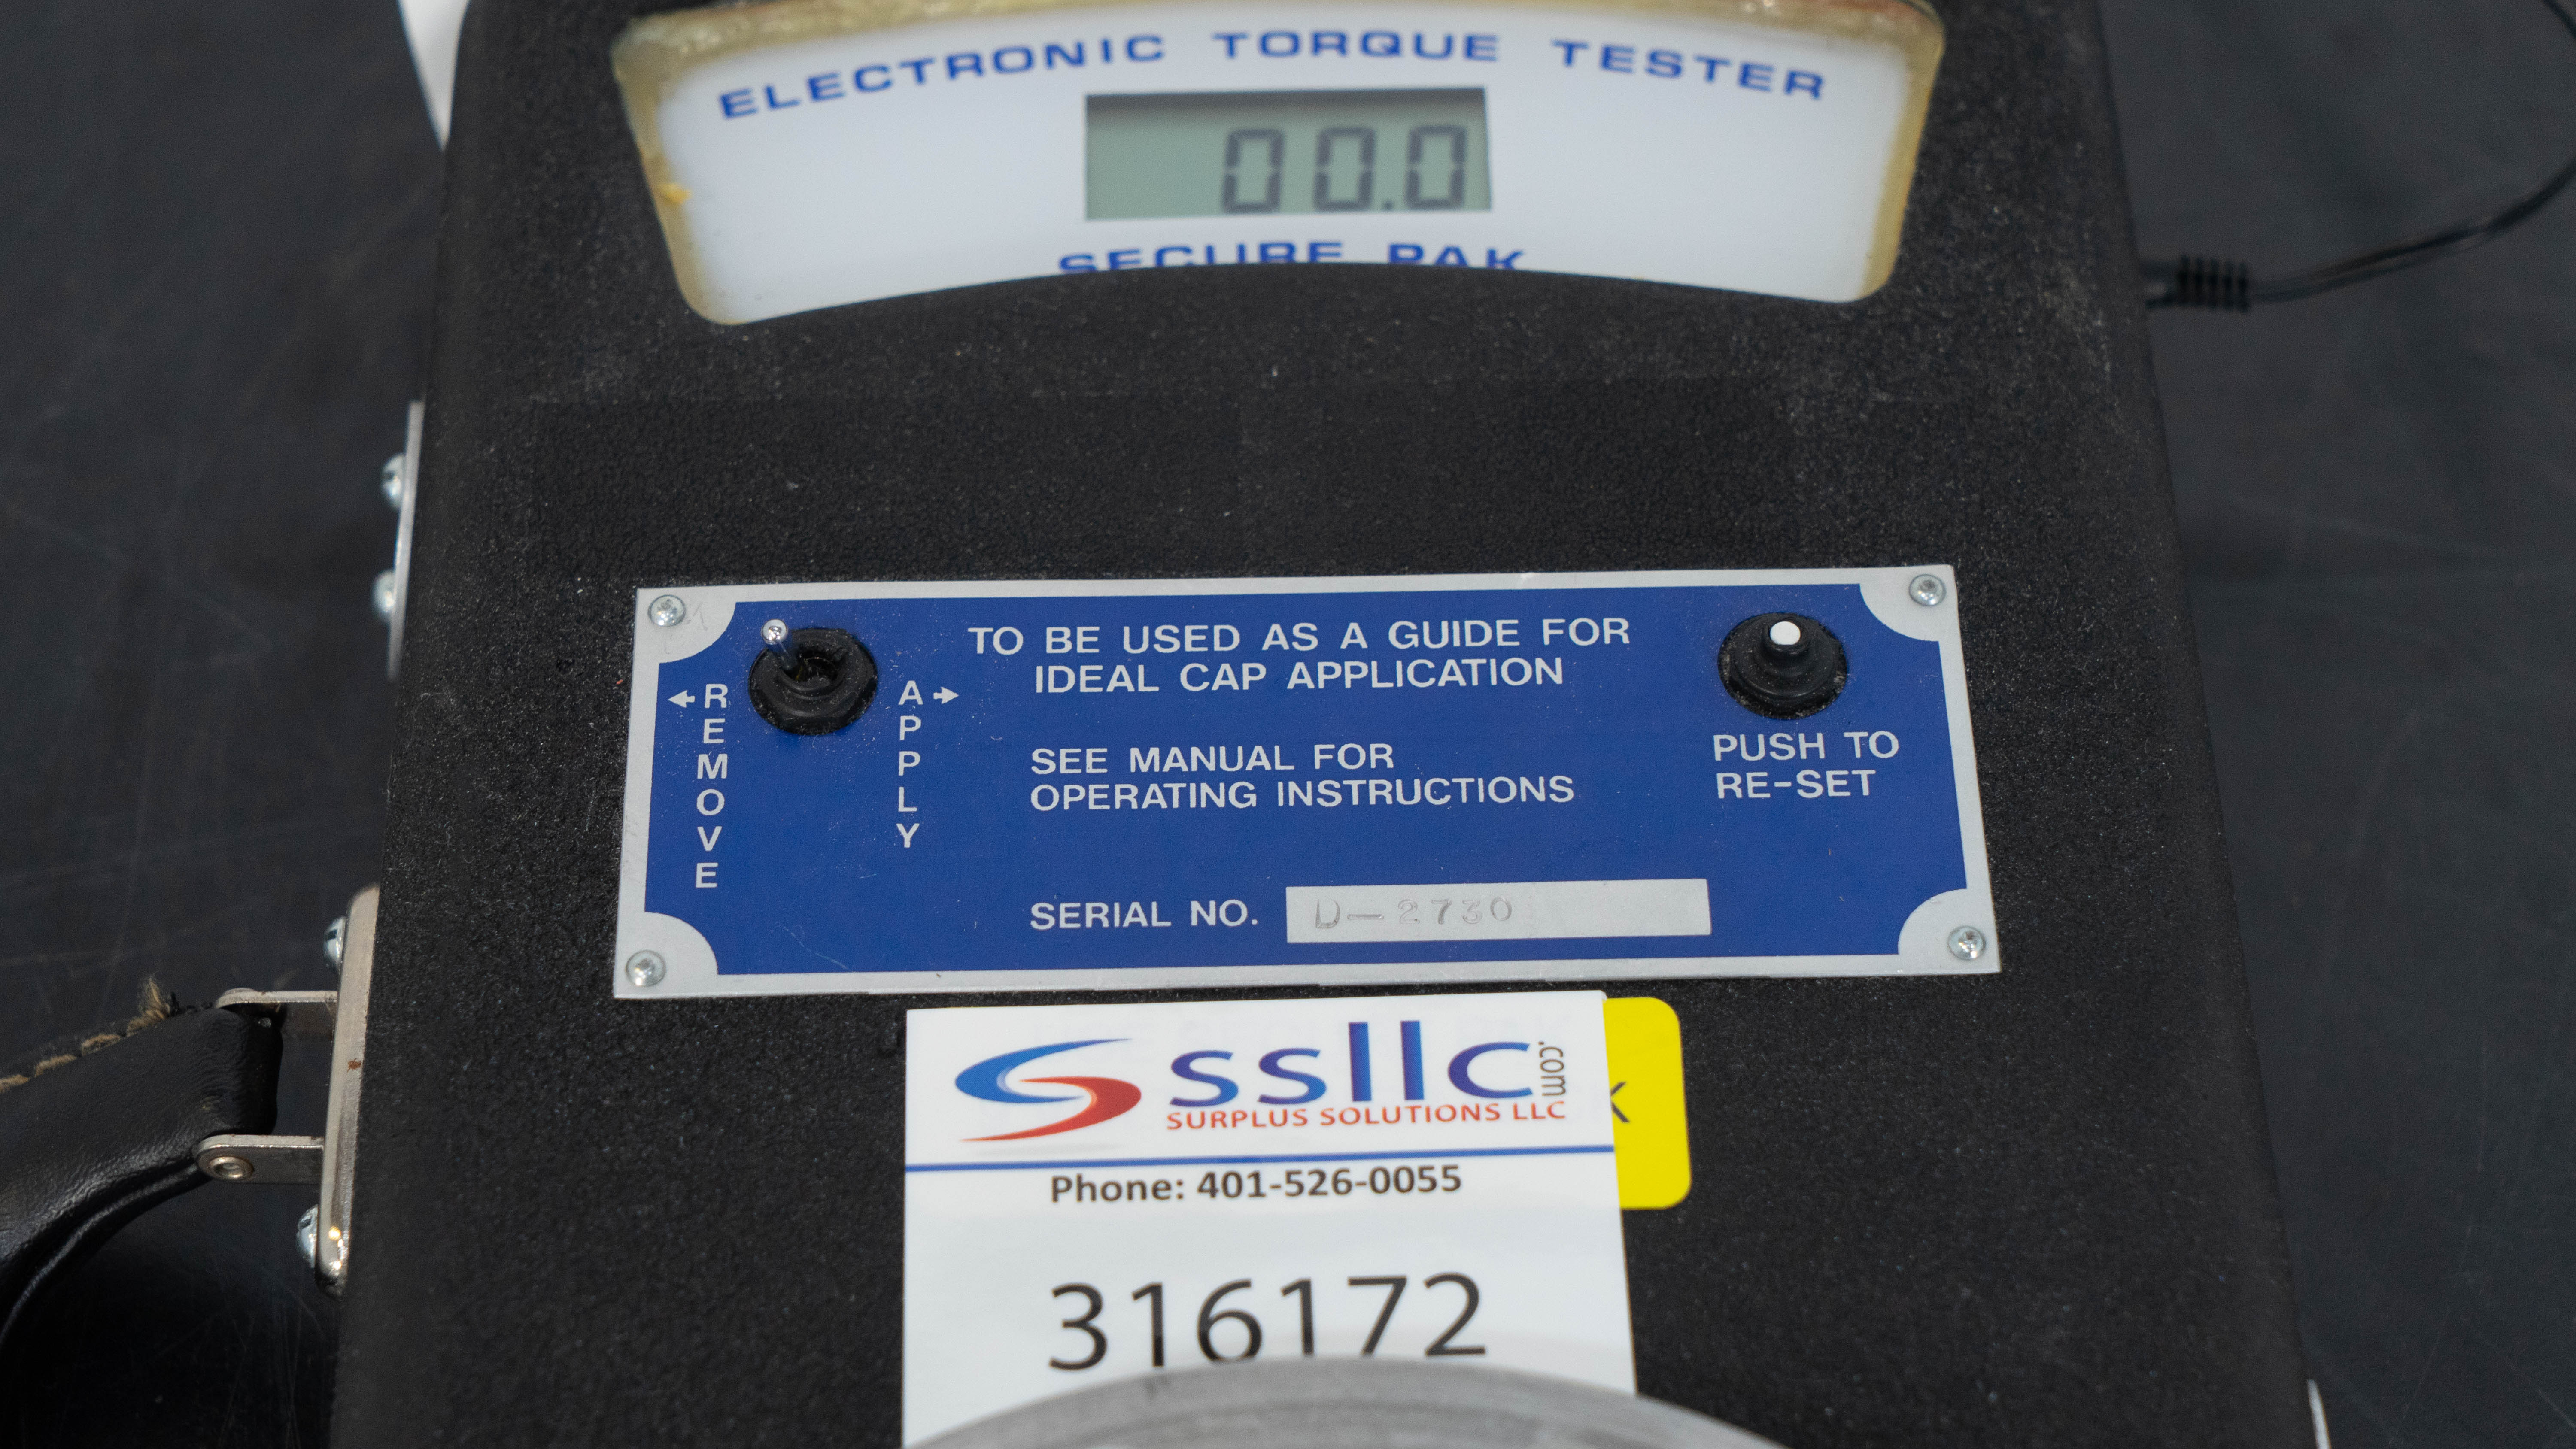 Secure Pak Electronic Torque Tester